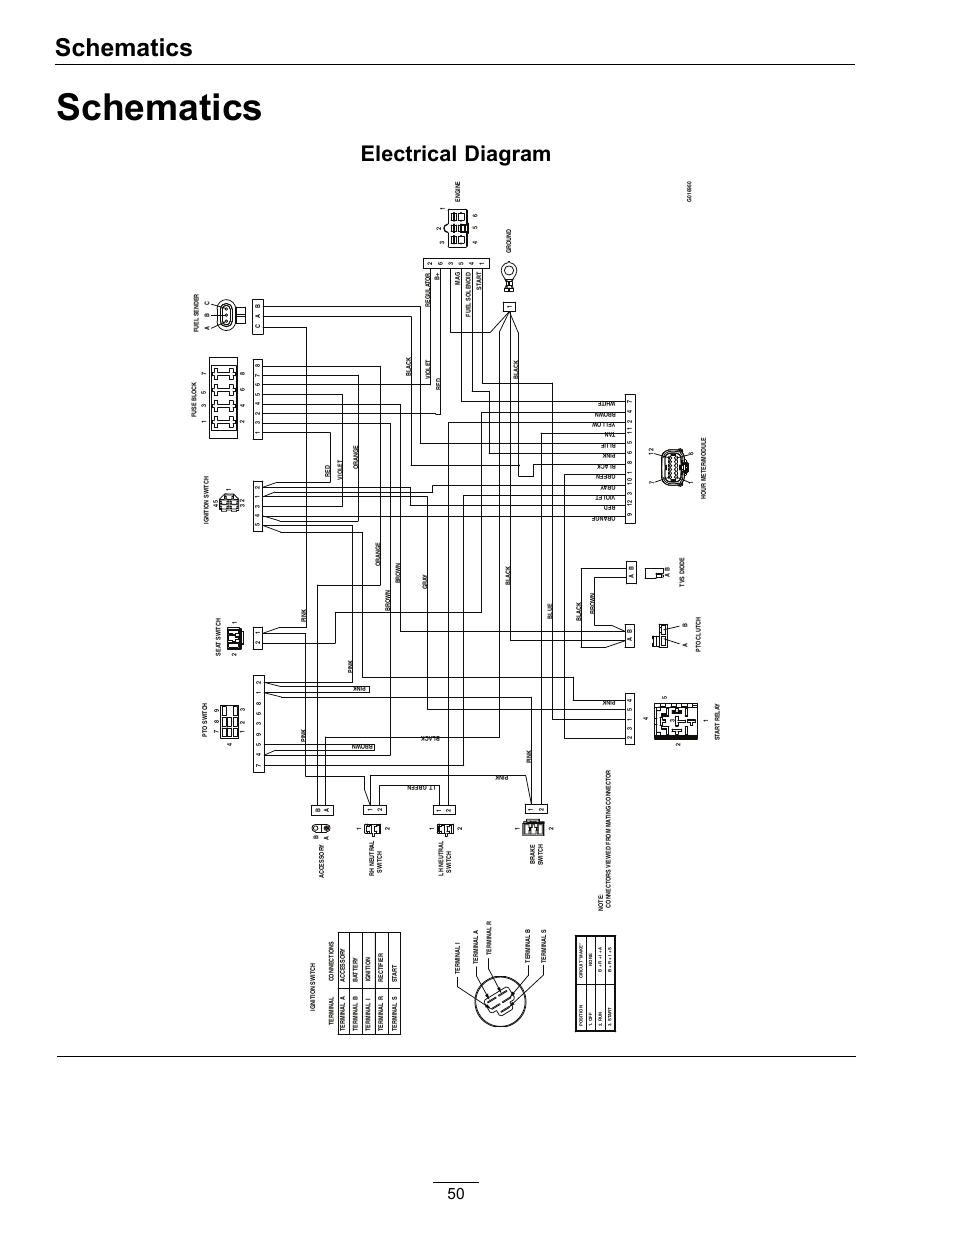 8141-00 defrost timer wiring diagram